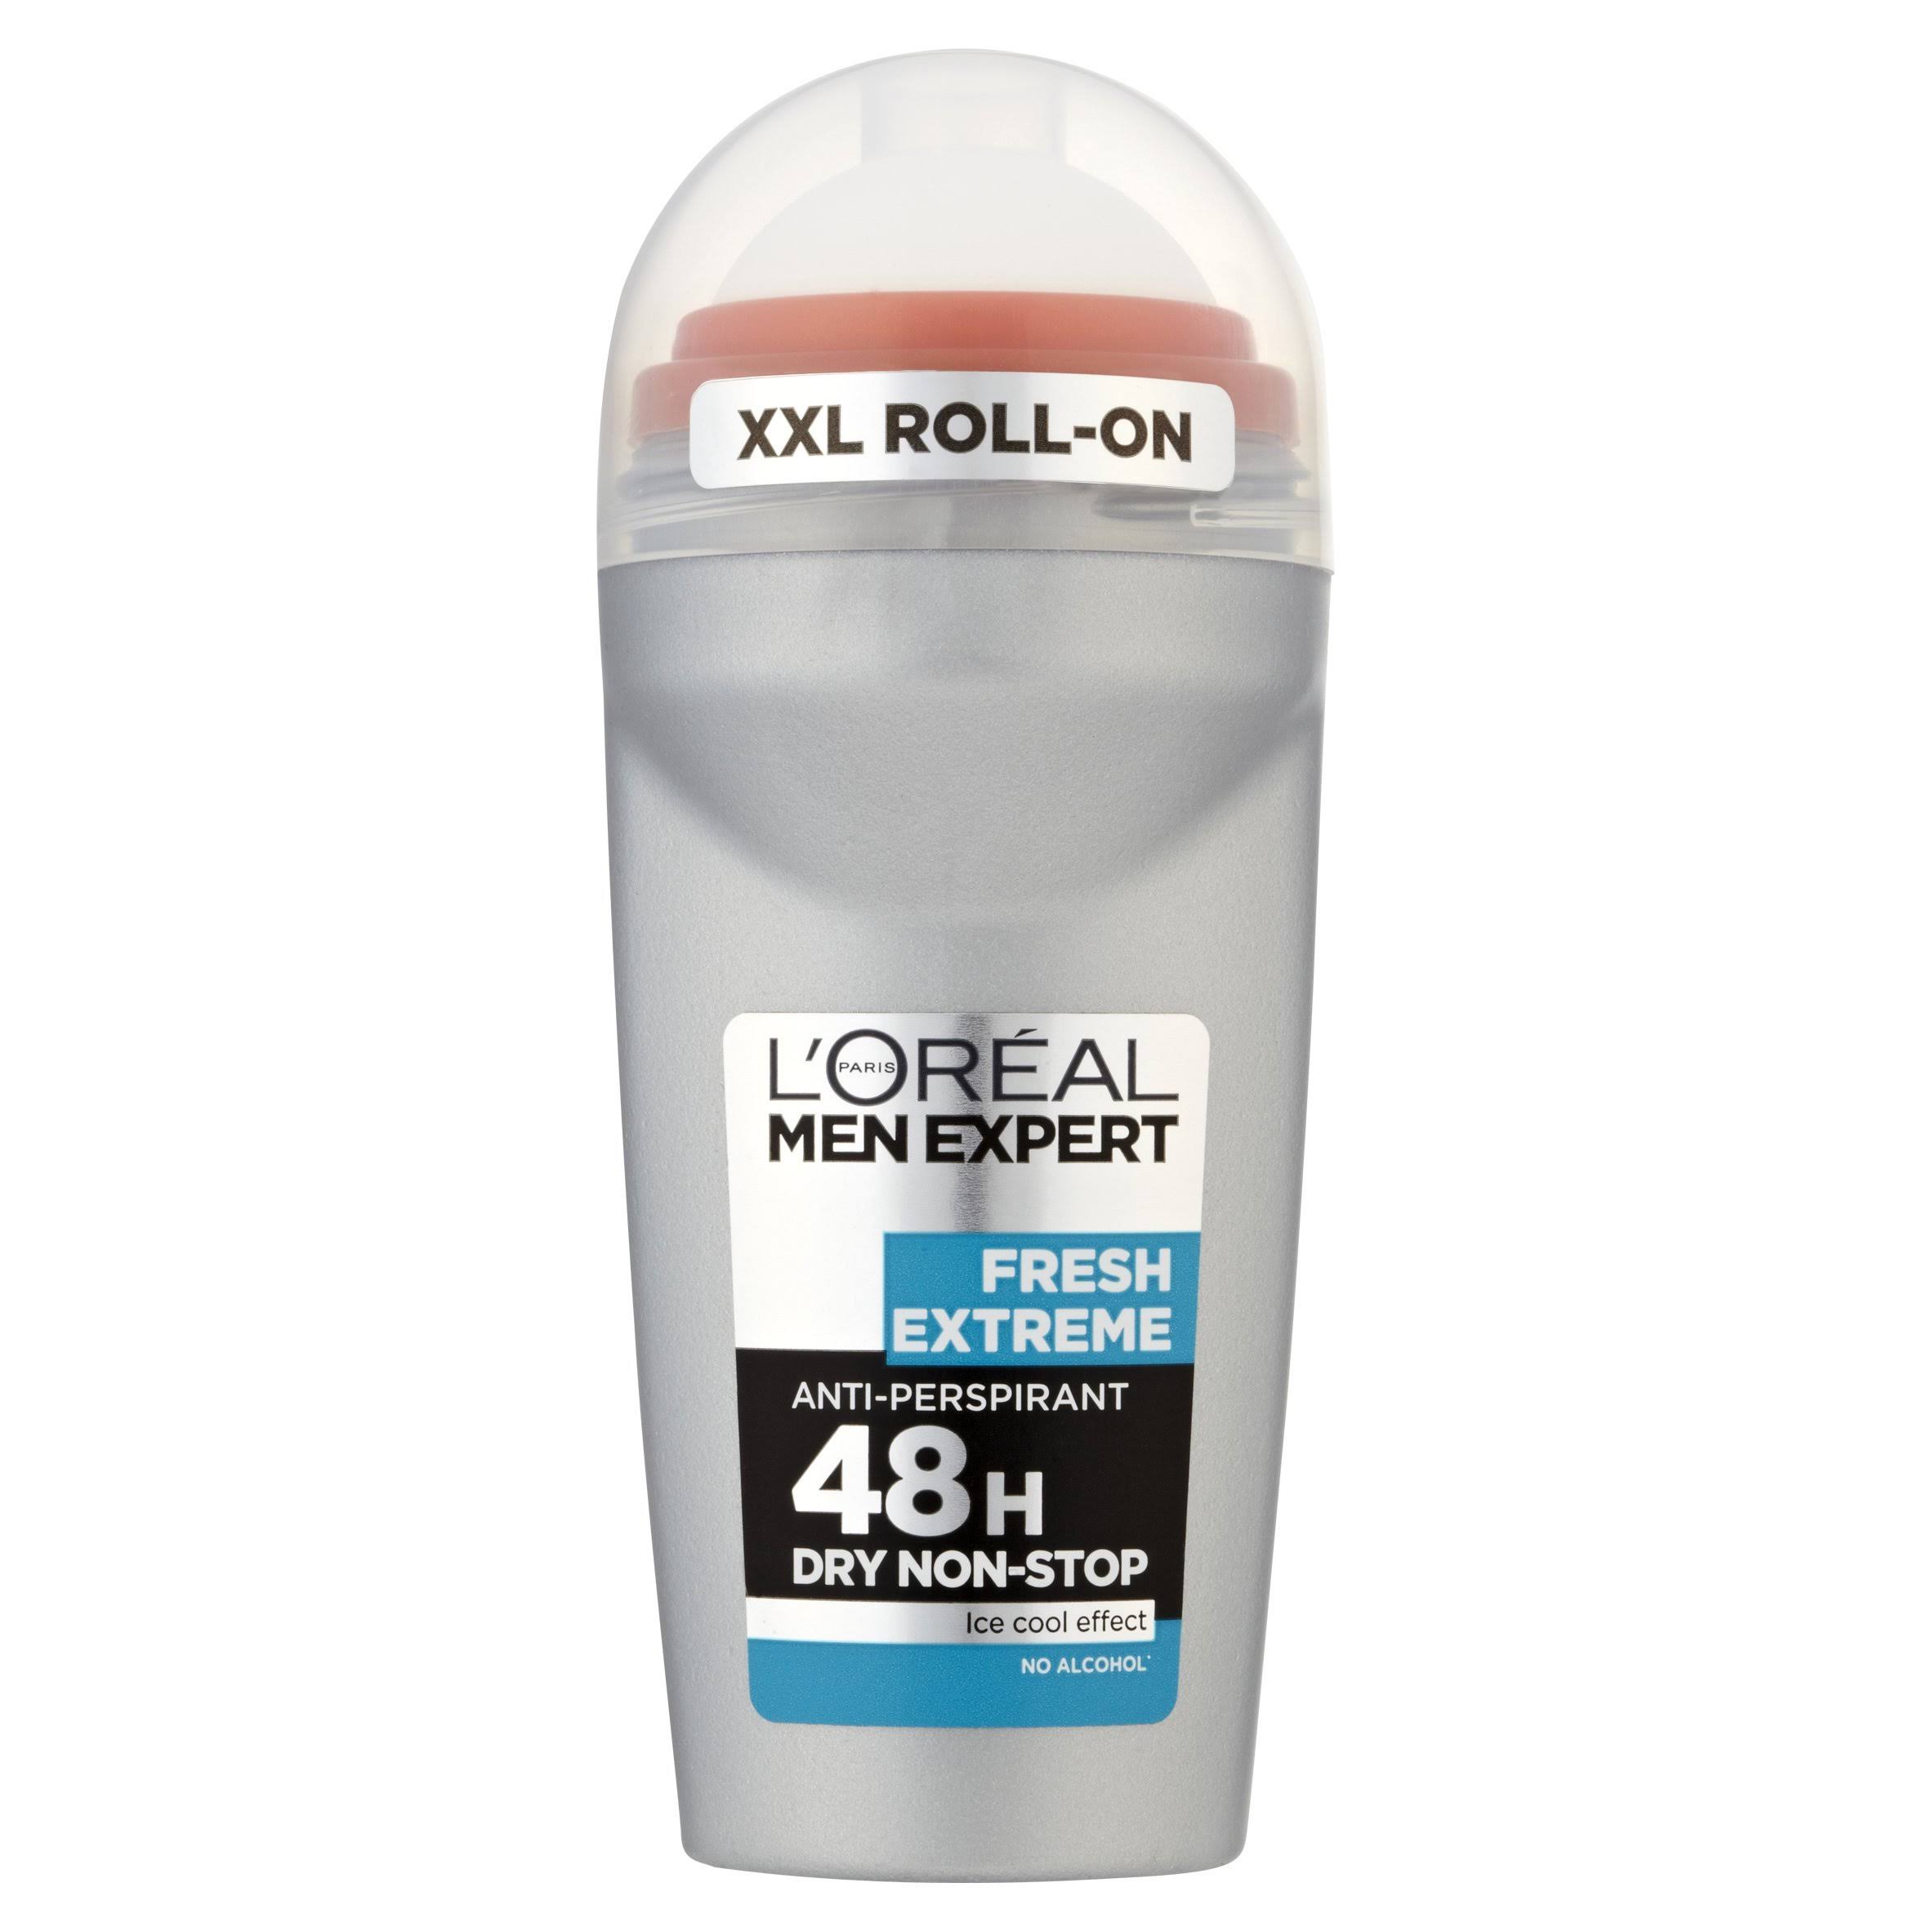 L'Oreal Paris Men Expert Roll-On Deodorant - Fresh Extreme, 50ml